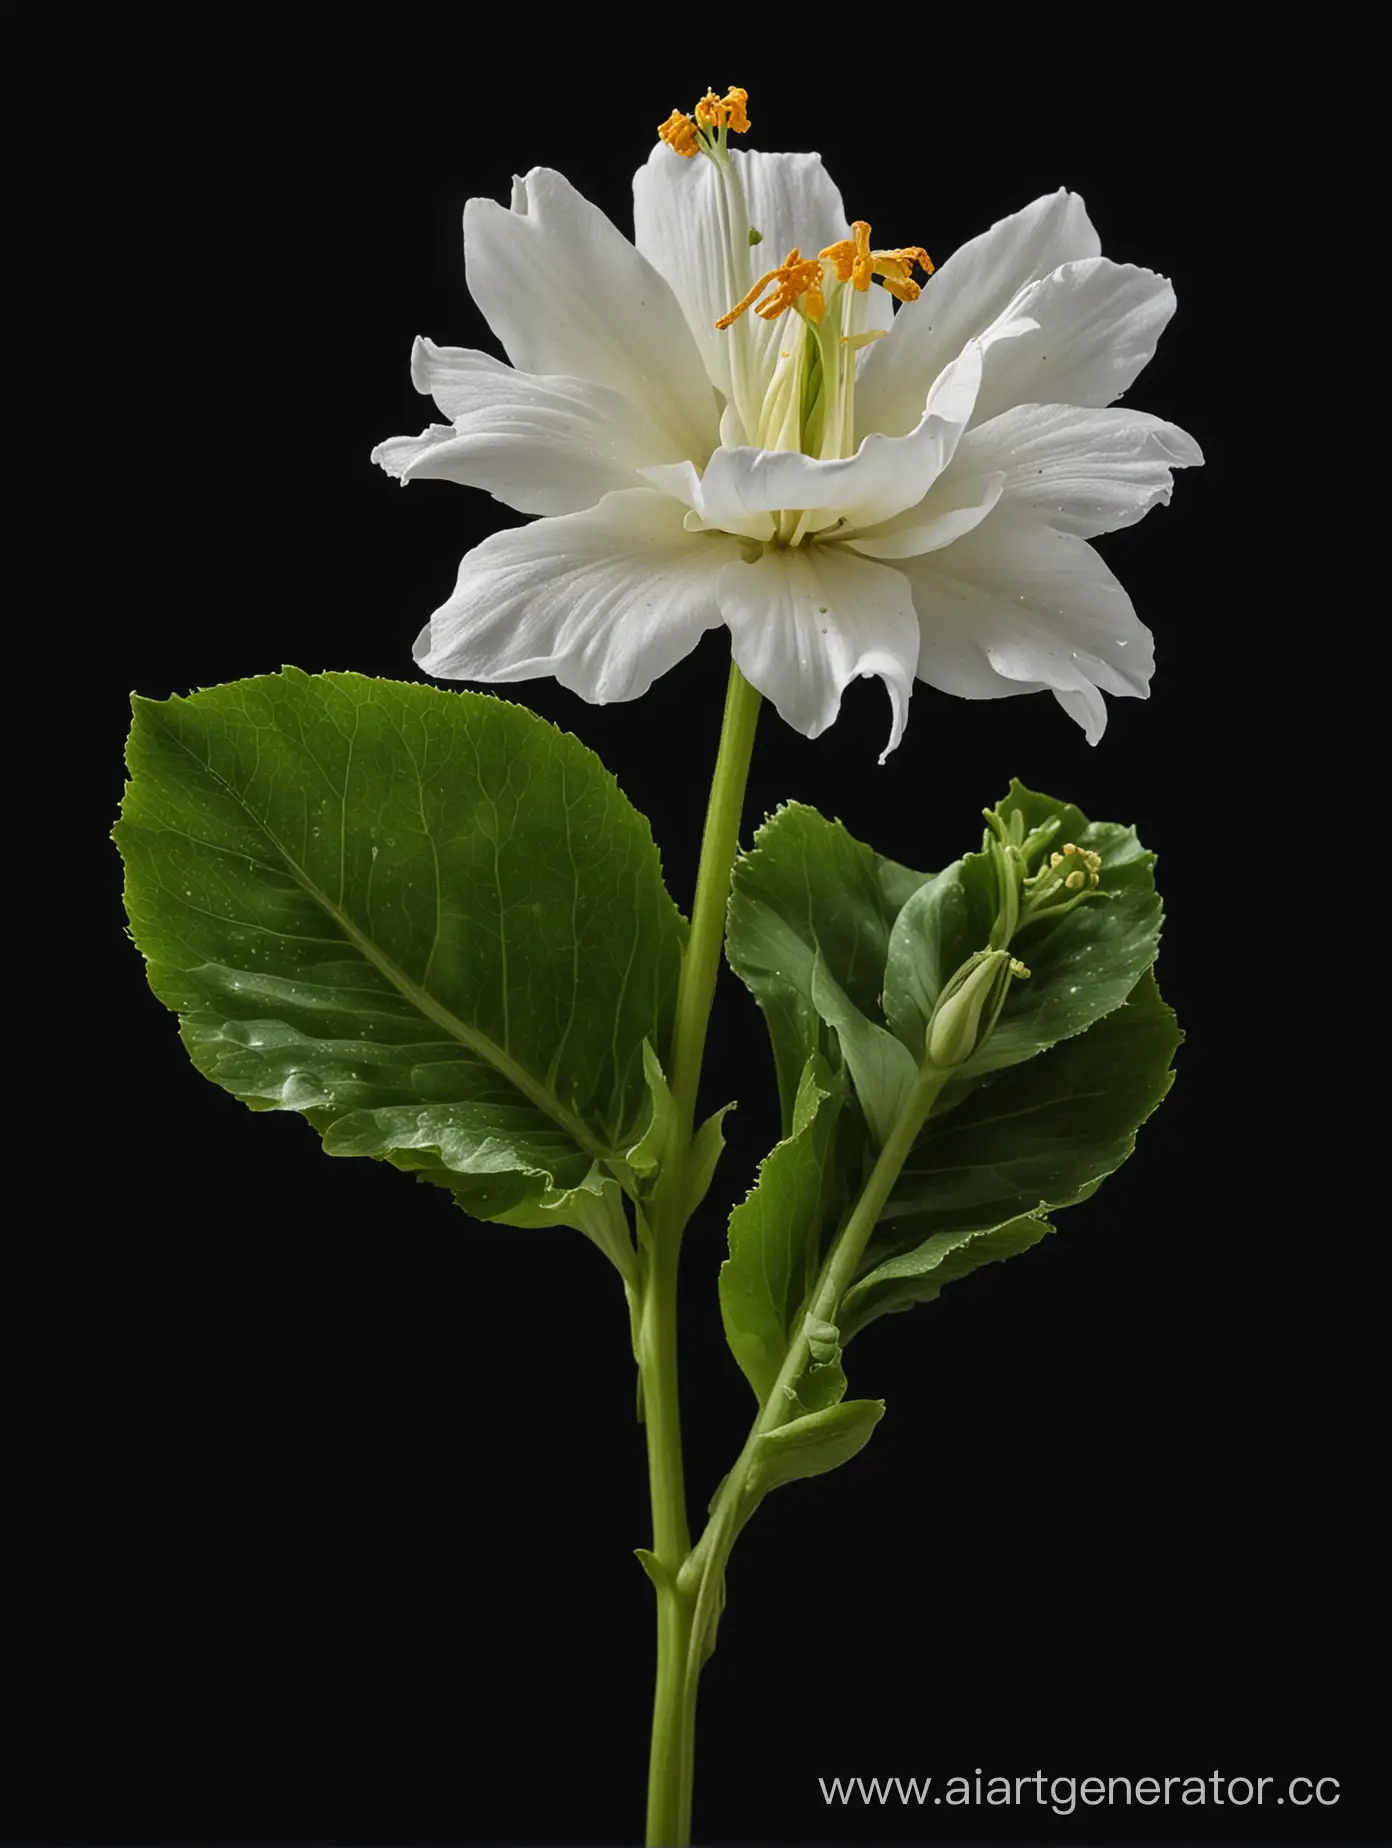 Amarnath flower on black background